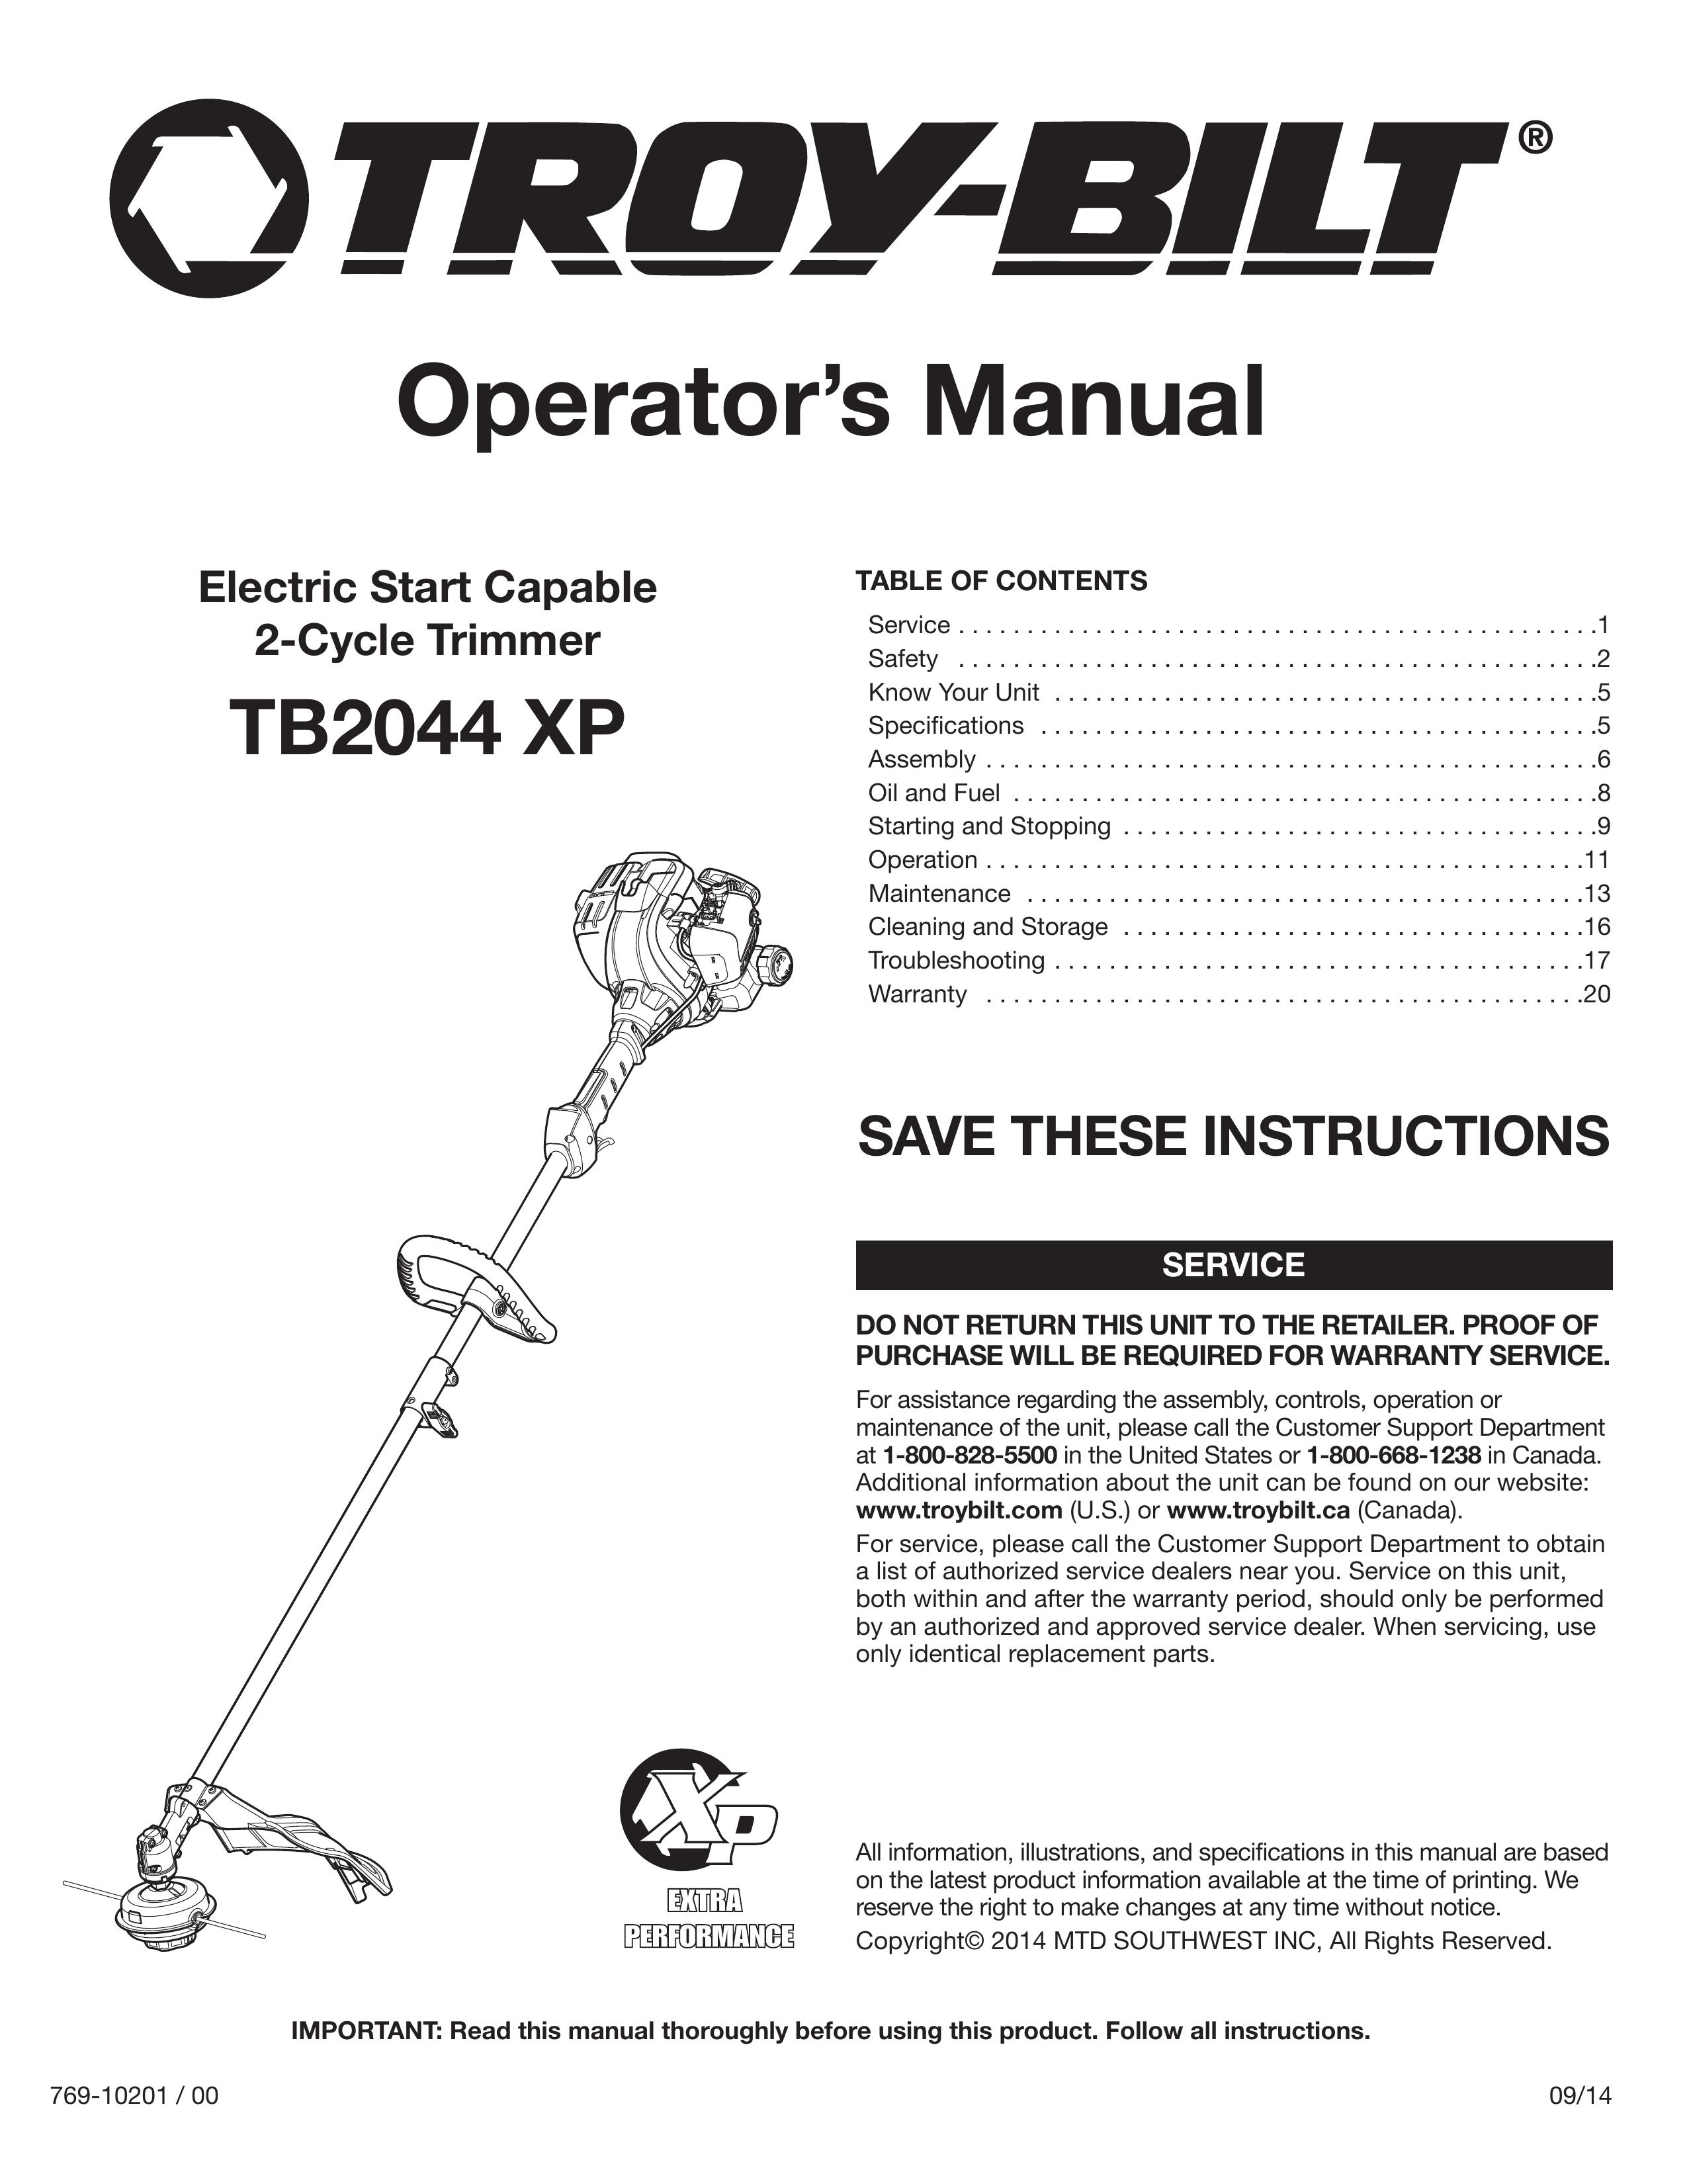 Troy-Bilt TB2044 XP Trimmer User Manual